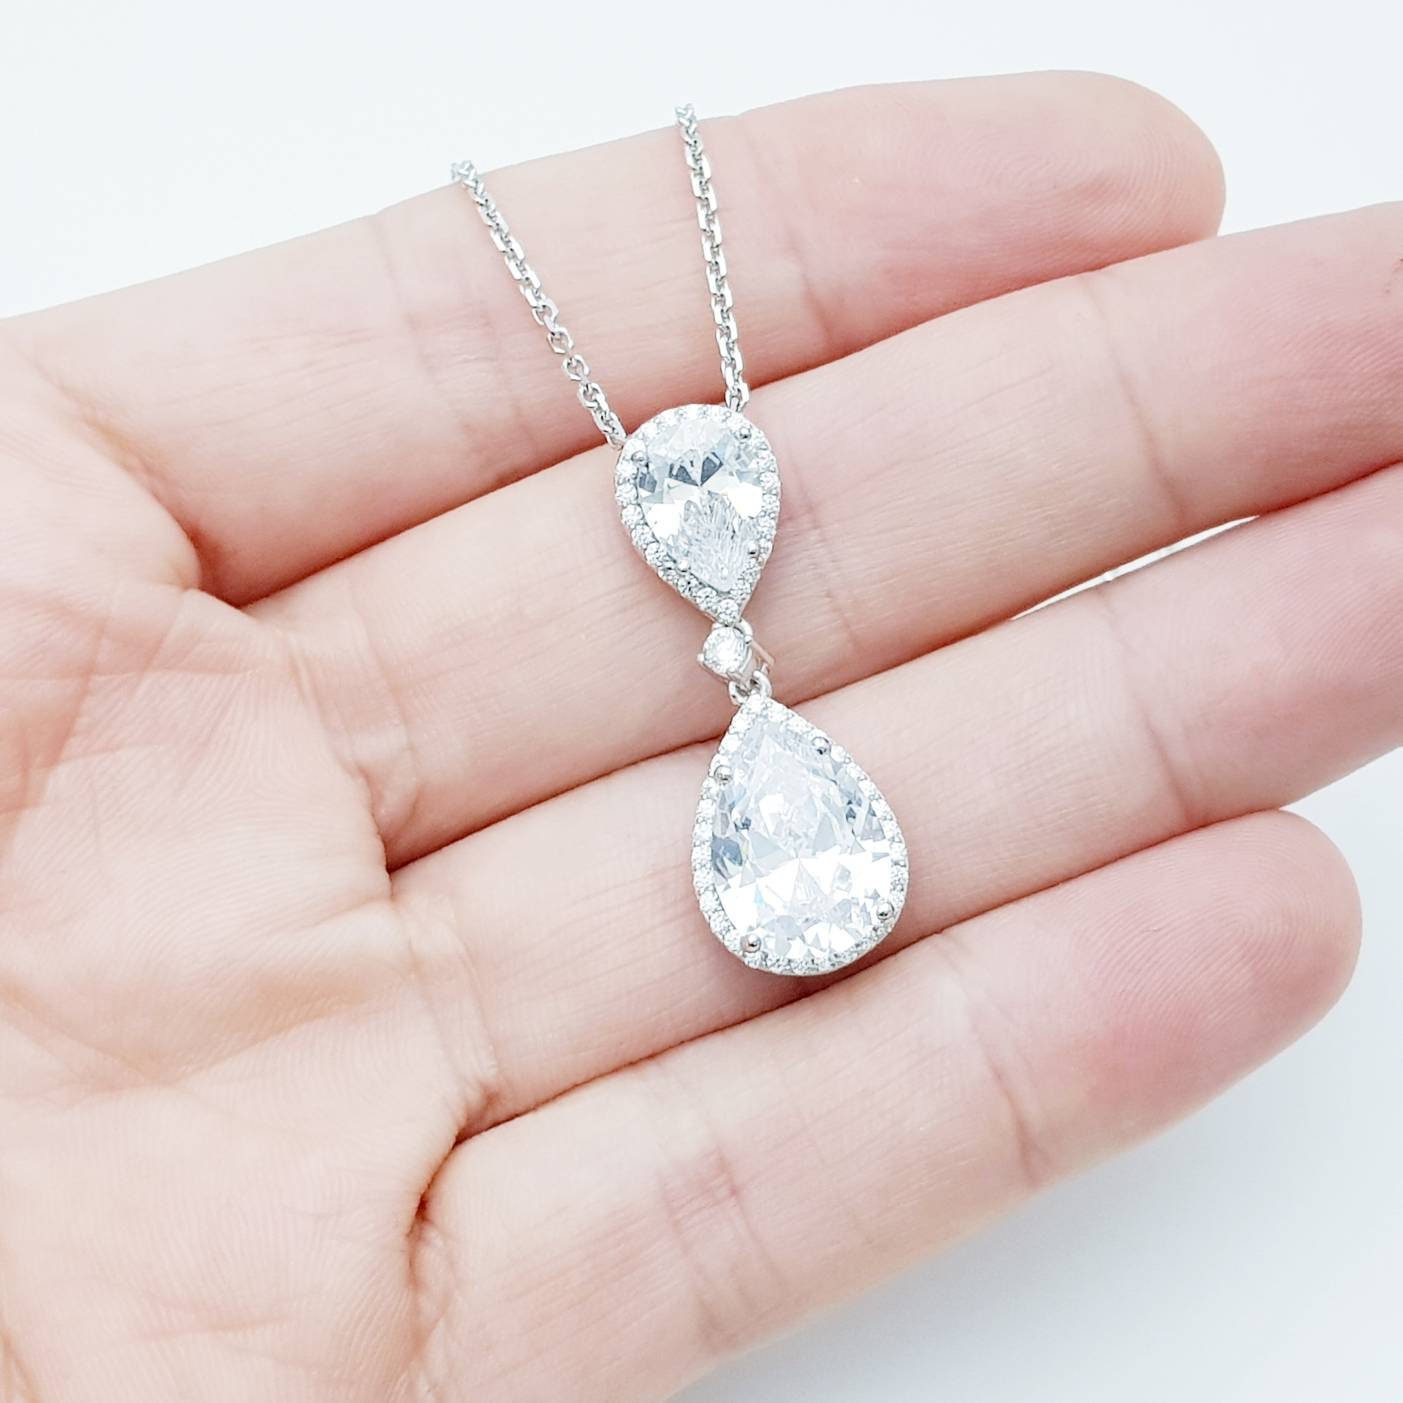 Sterling silver teardrop shaped necklace, vintage style pendant